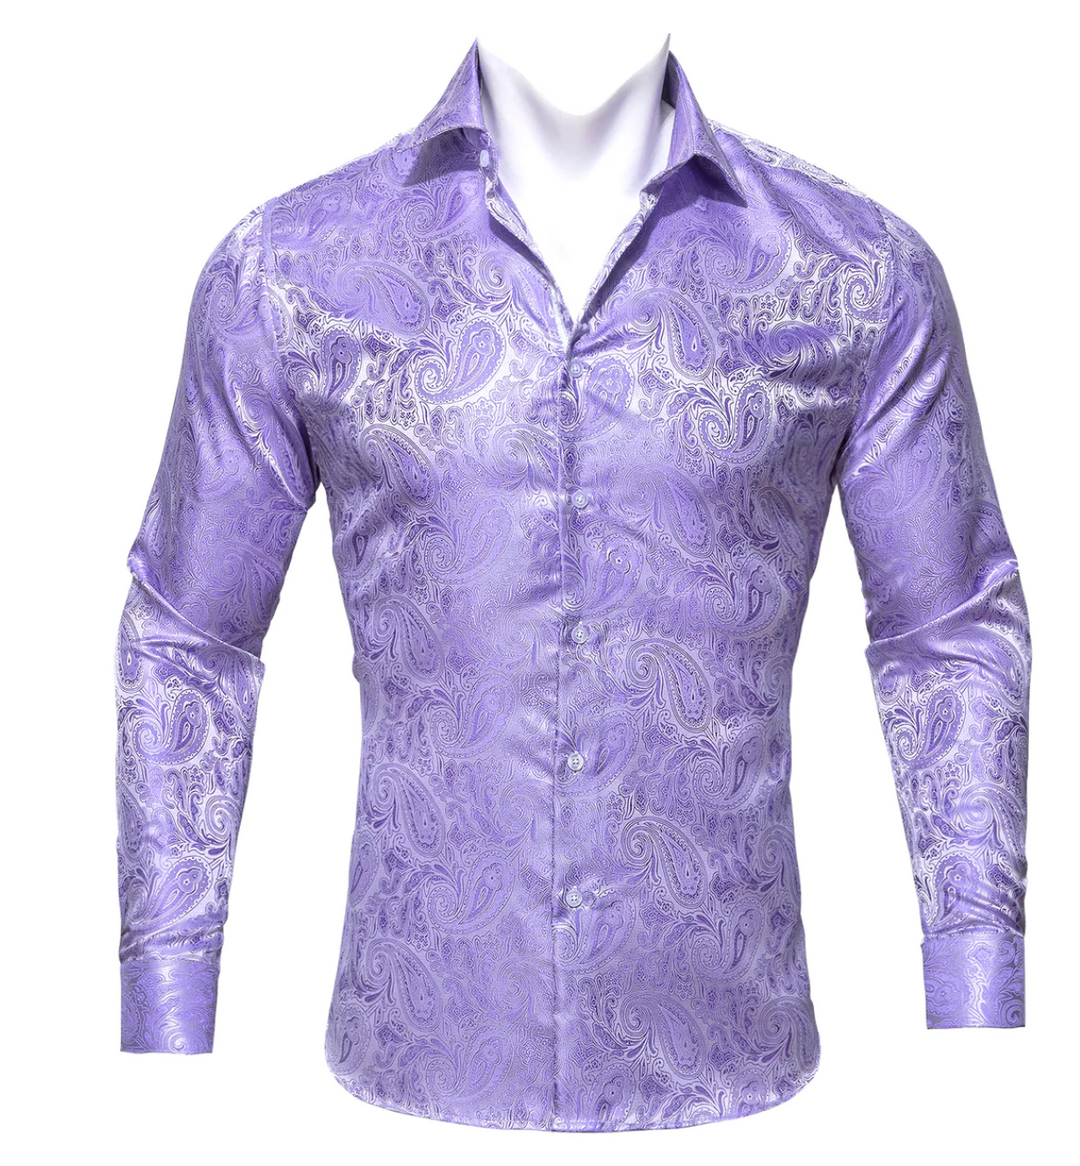 Simon Von New Purple Paisley Silk Shirt -CY-0423 – SimonVon Shop